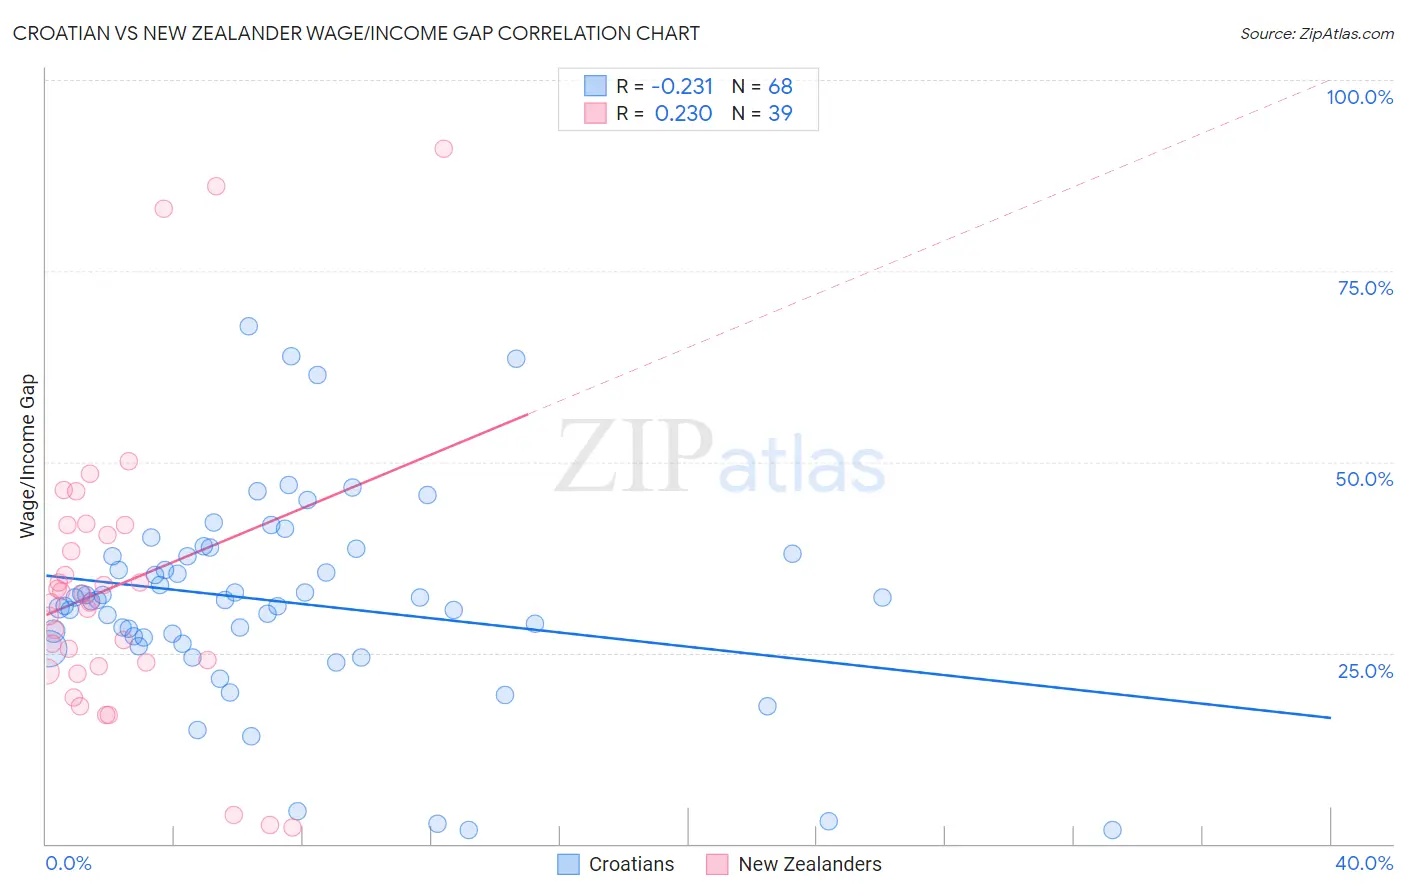 Croatian vs New Zealander Wage/Income Gap